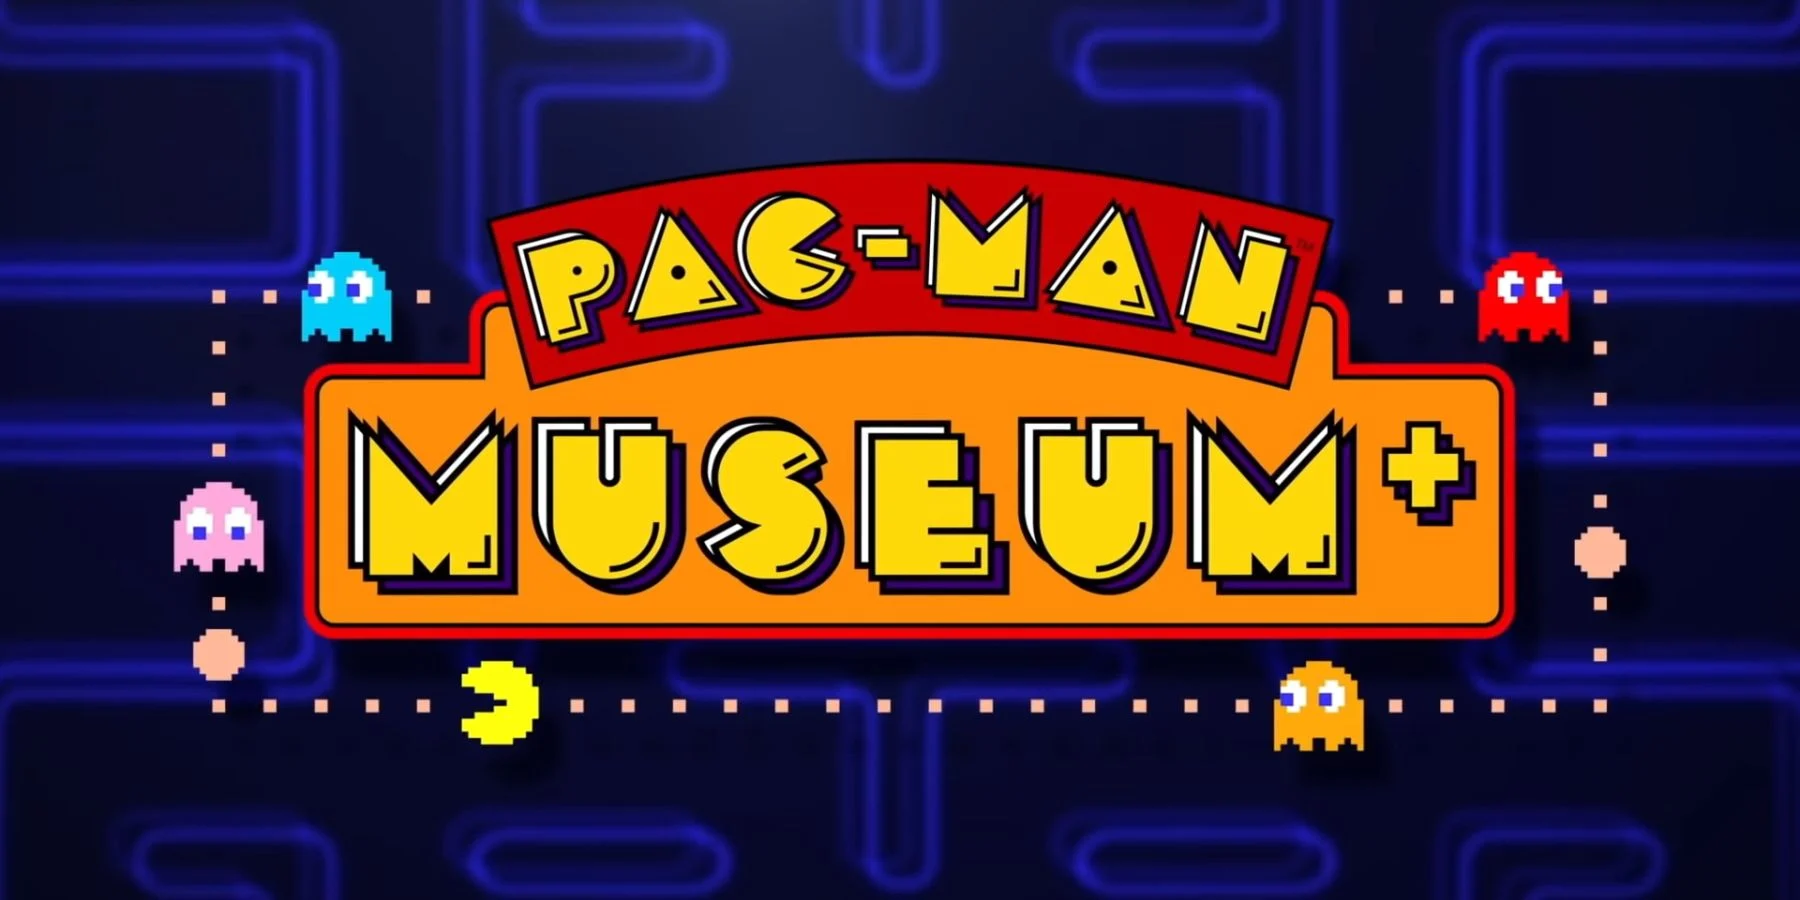 Pac-Man Museum+ game poster